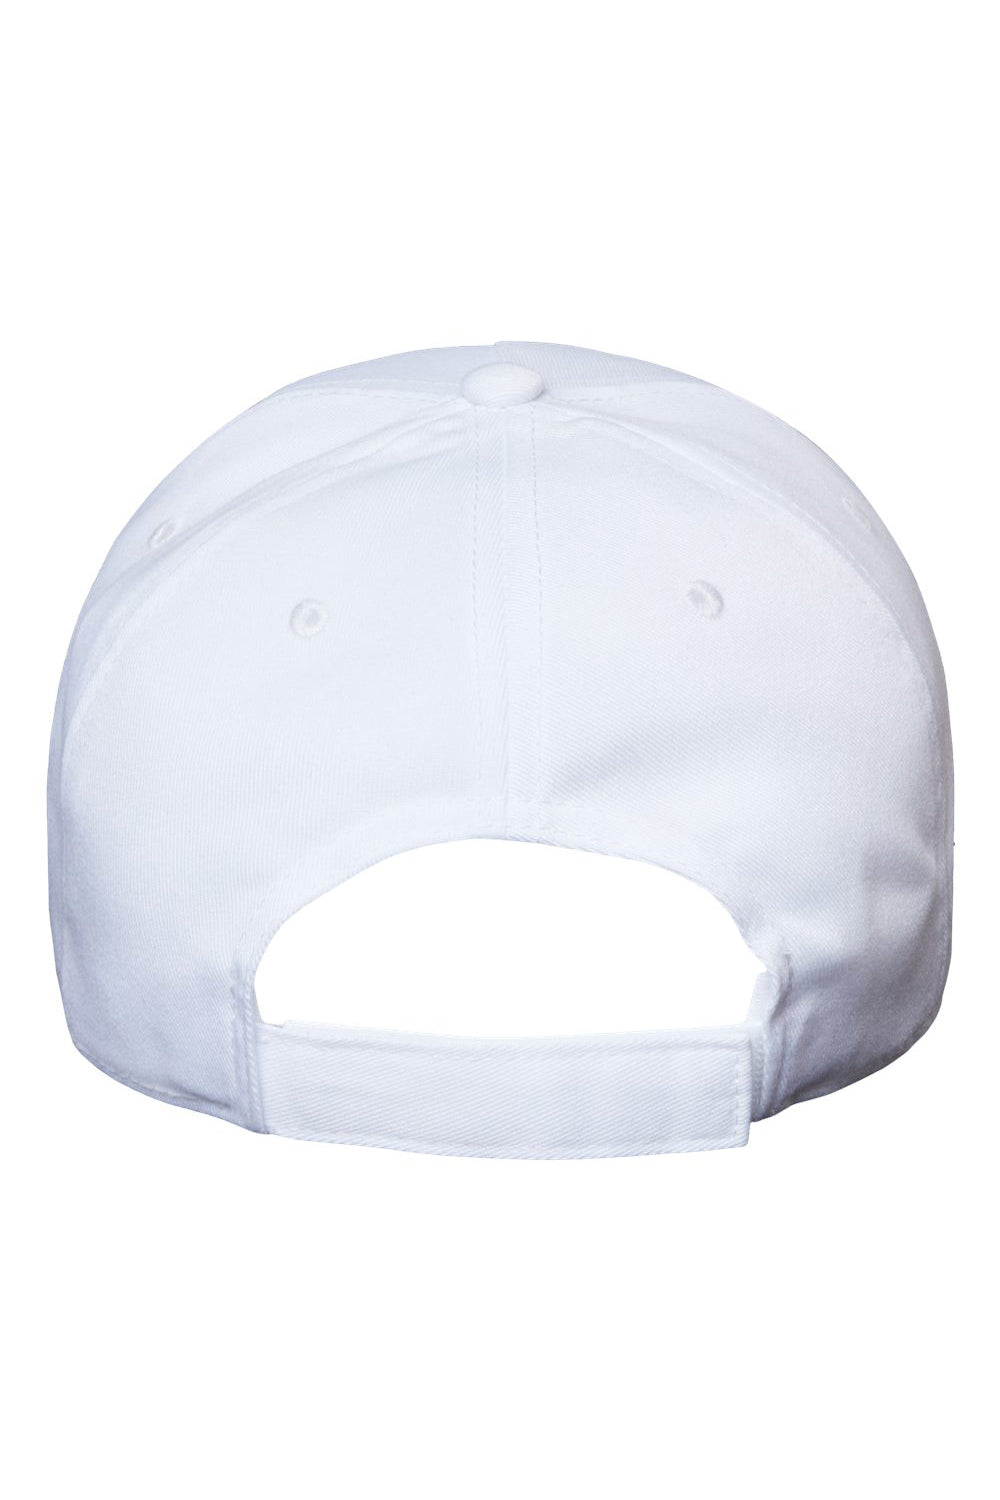 Atlantis Headwear FIJI Mens Sustainable Adjustable Hat White Flat Back